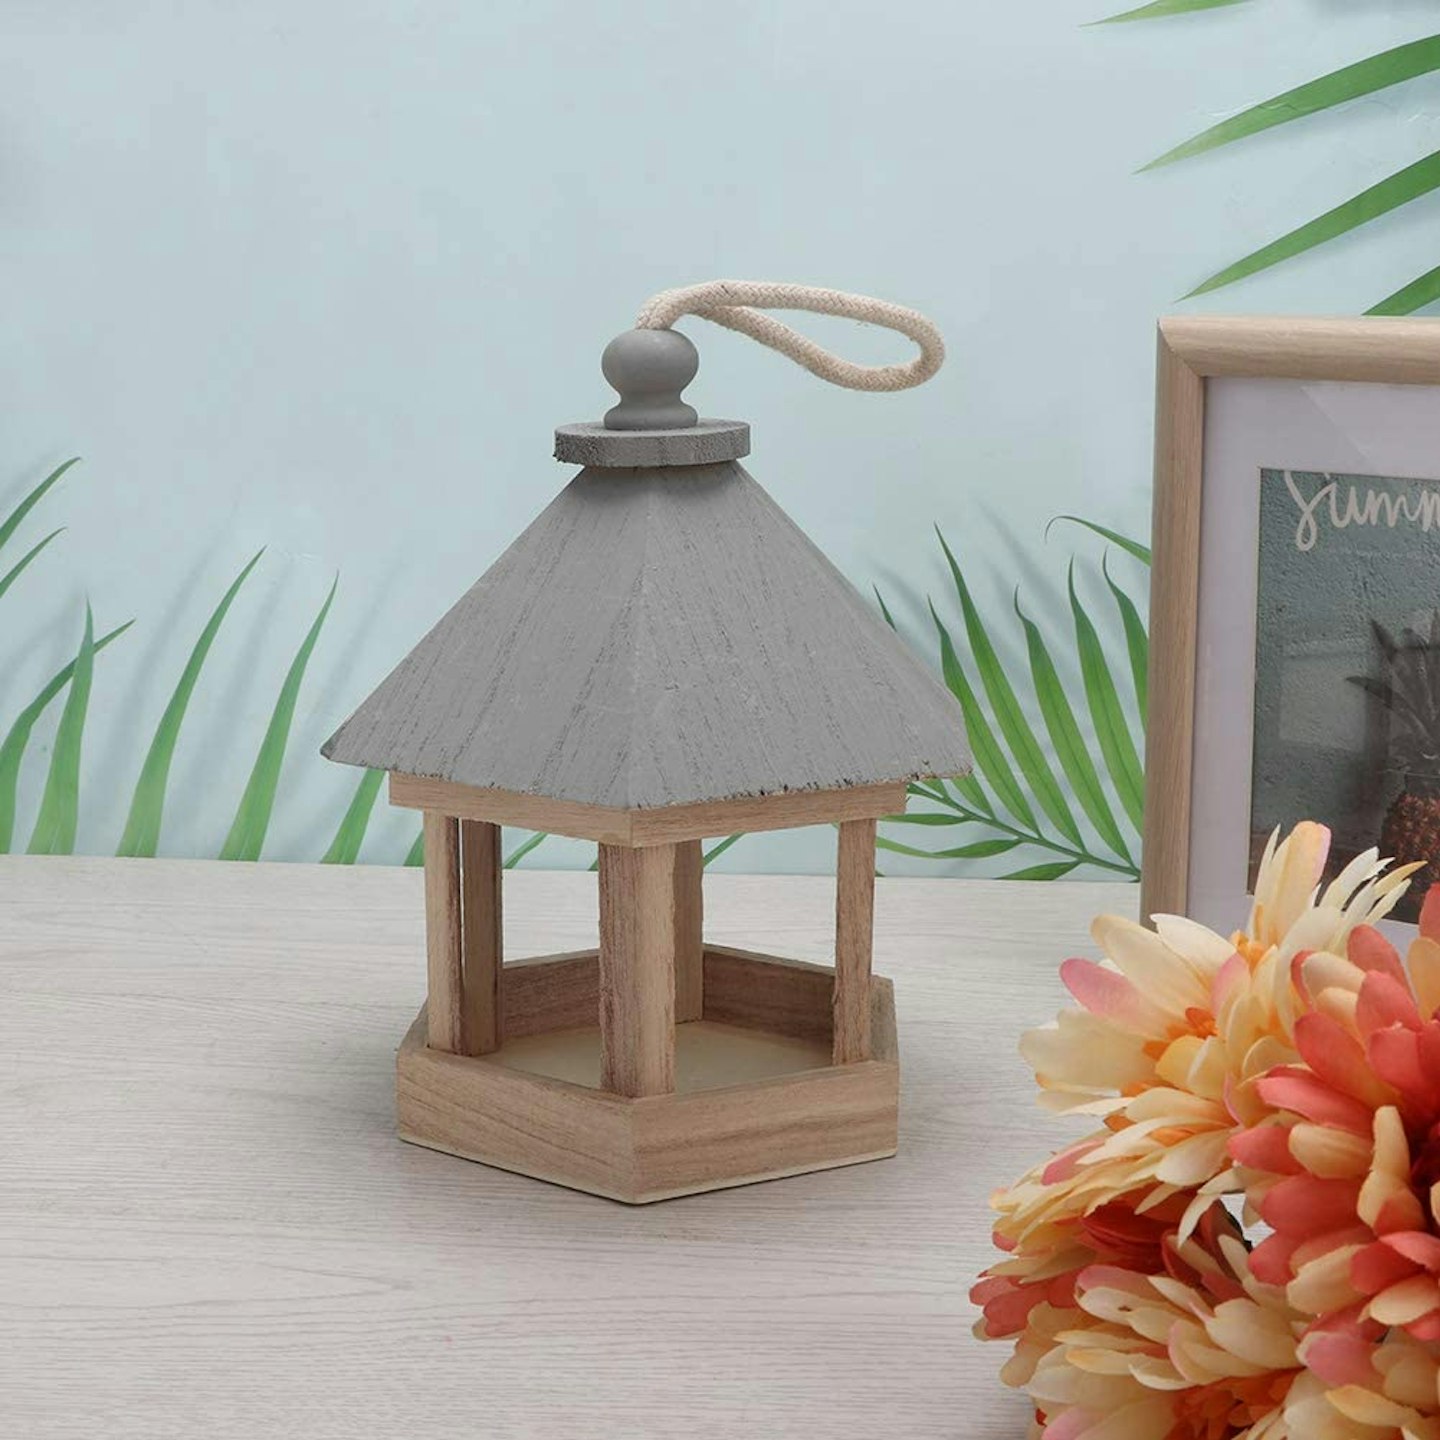 The best bird-watching gifts: Petyoung Wooden Bird Feeder